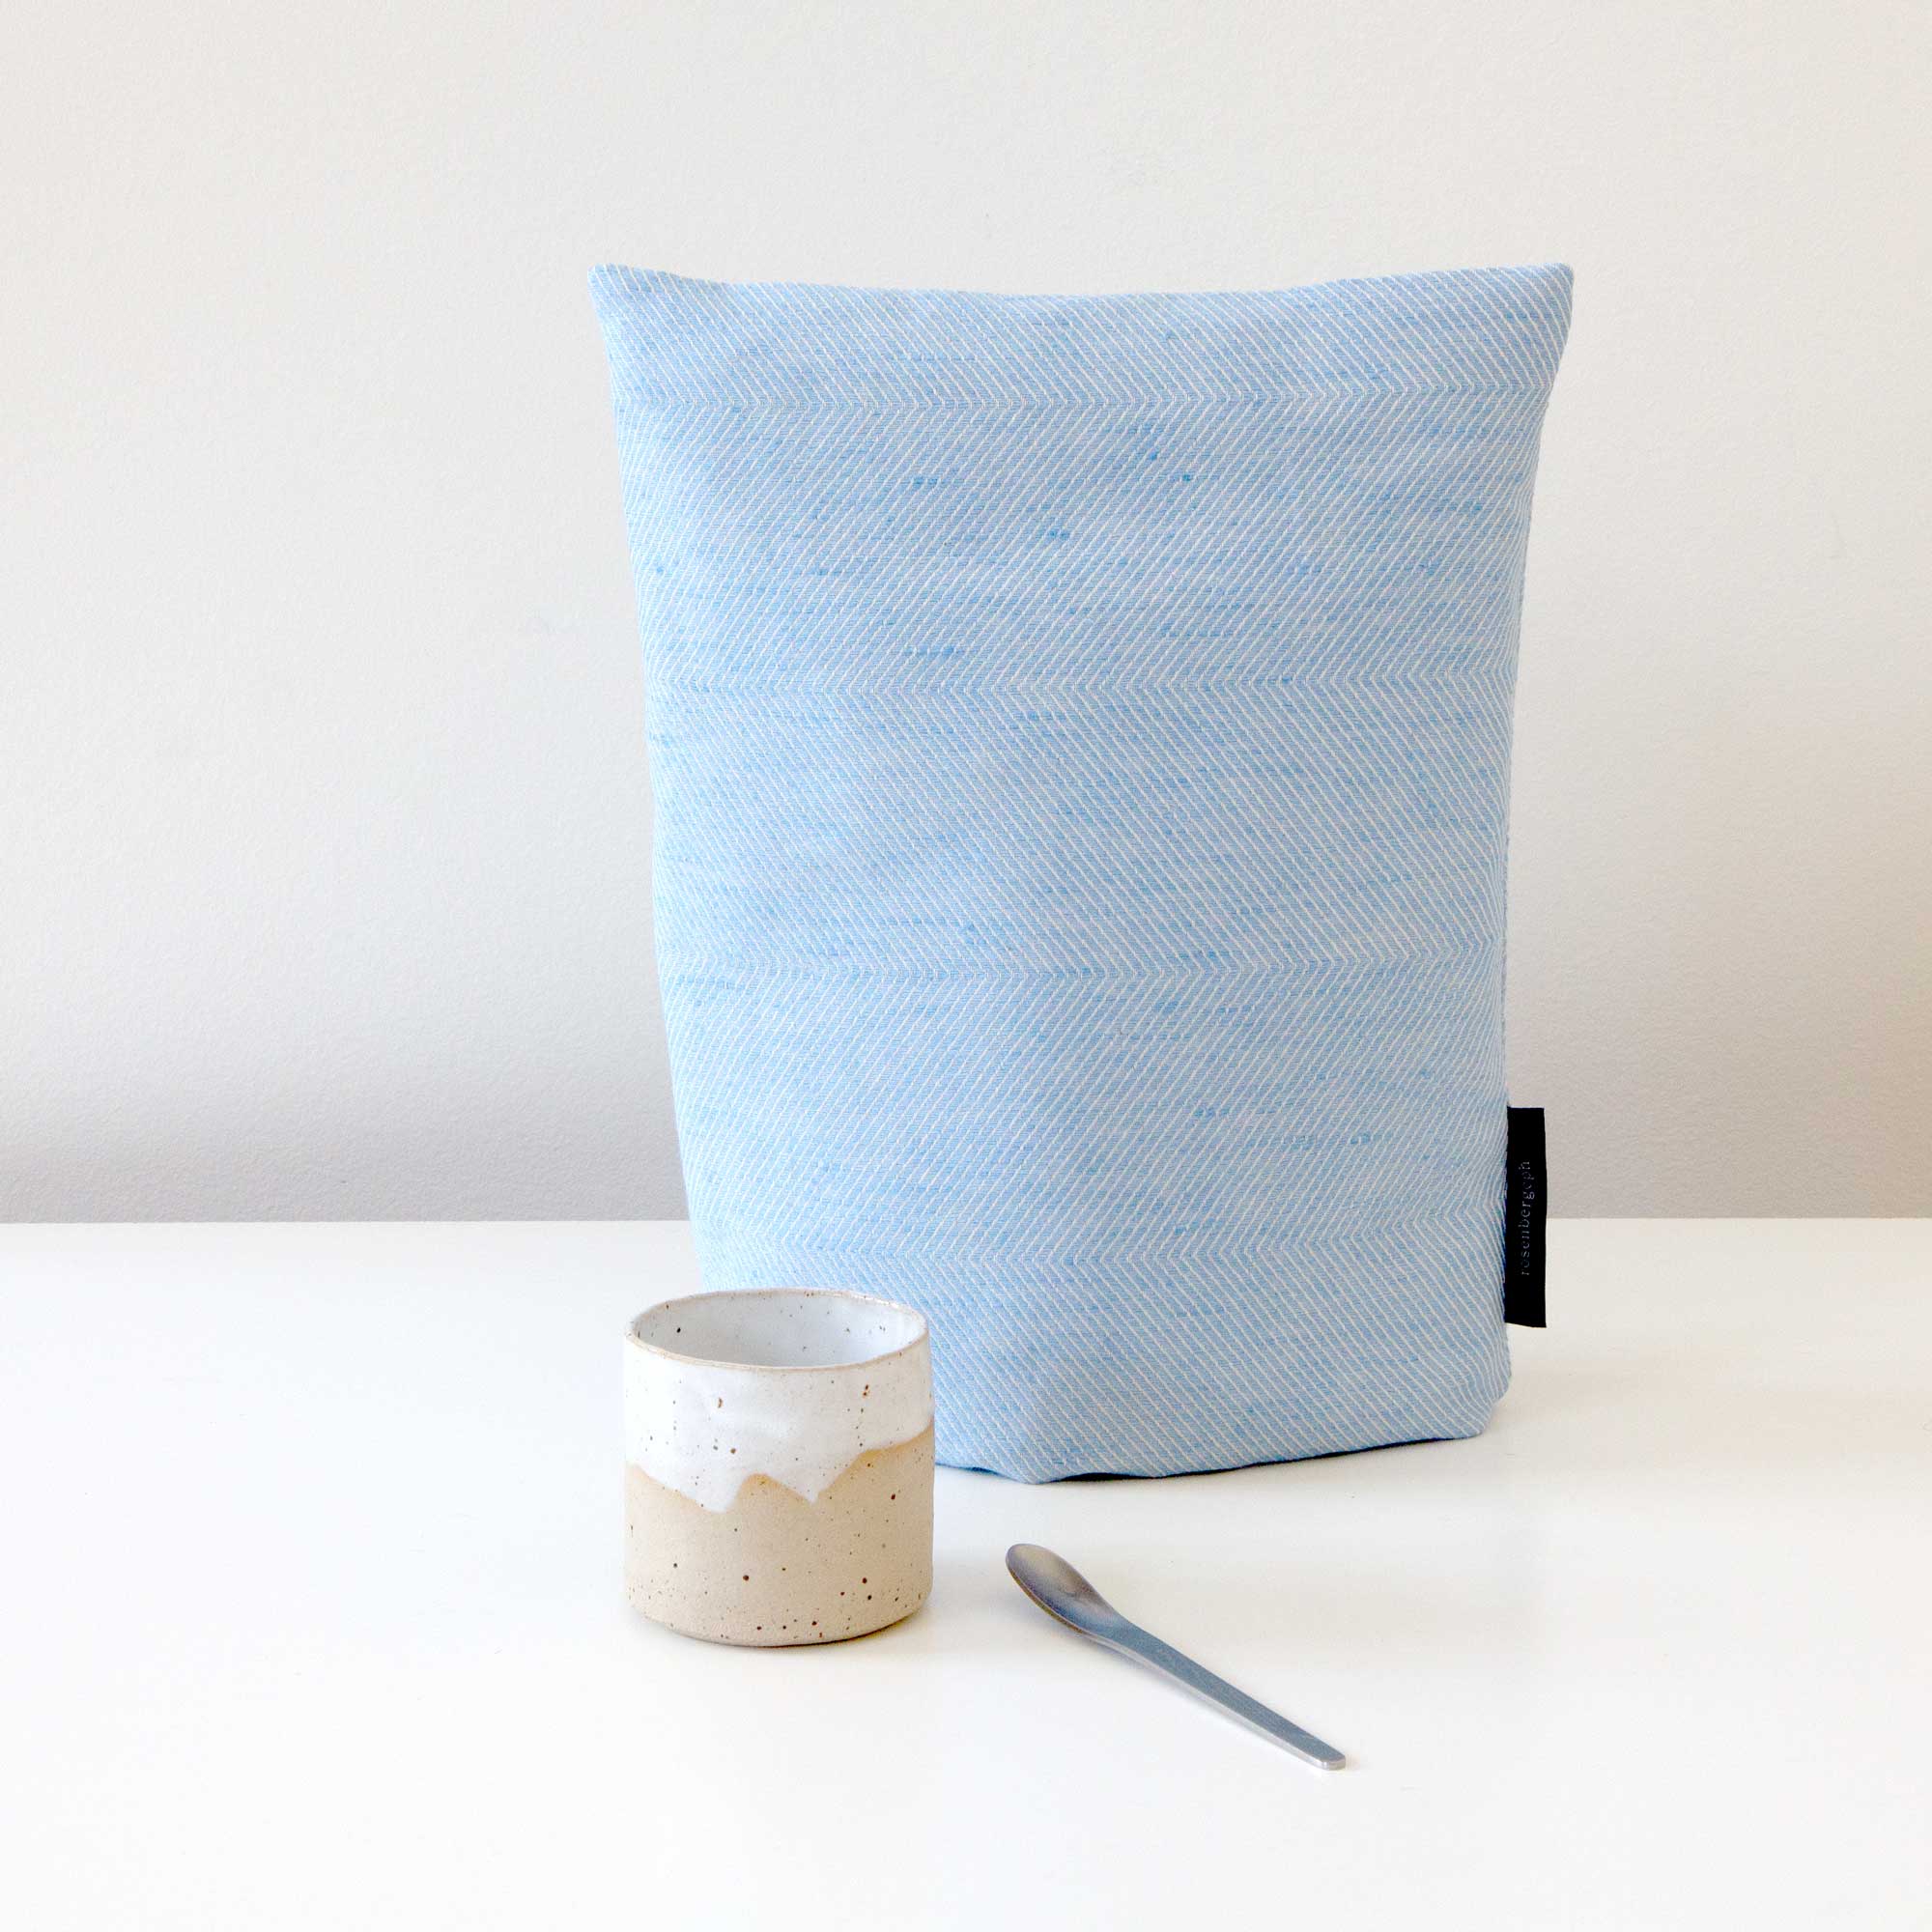 Coffee cosy, Sky blue, linen/cotton, design by Anne Rosenberg, RosenbergCph